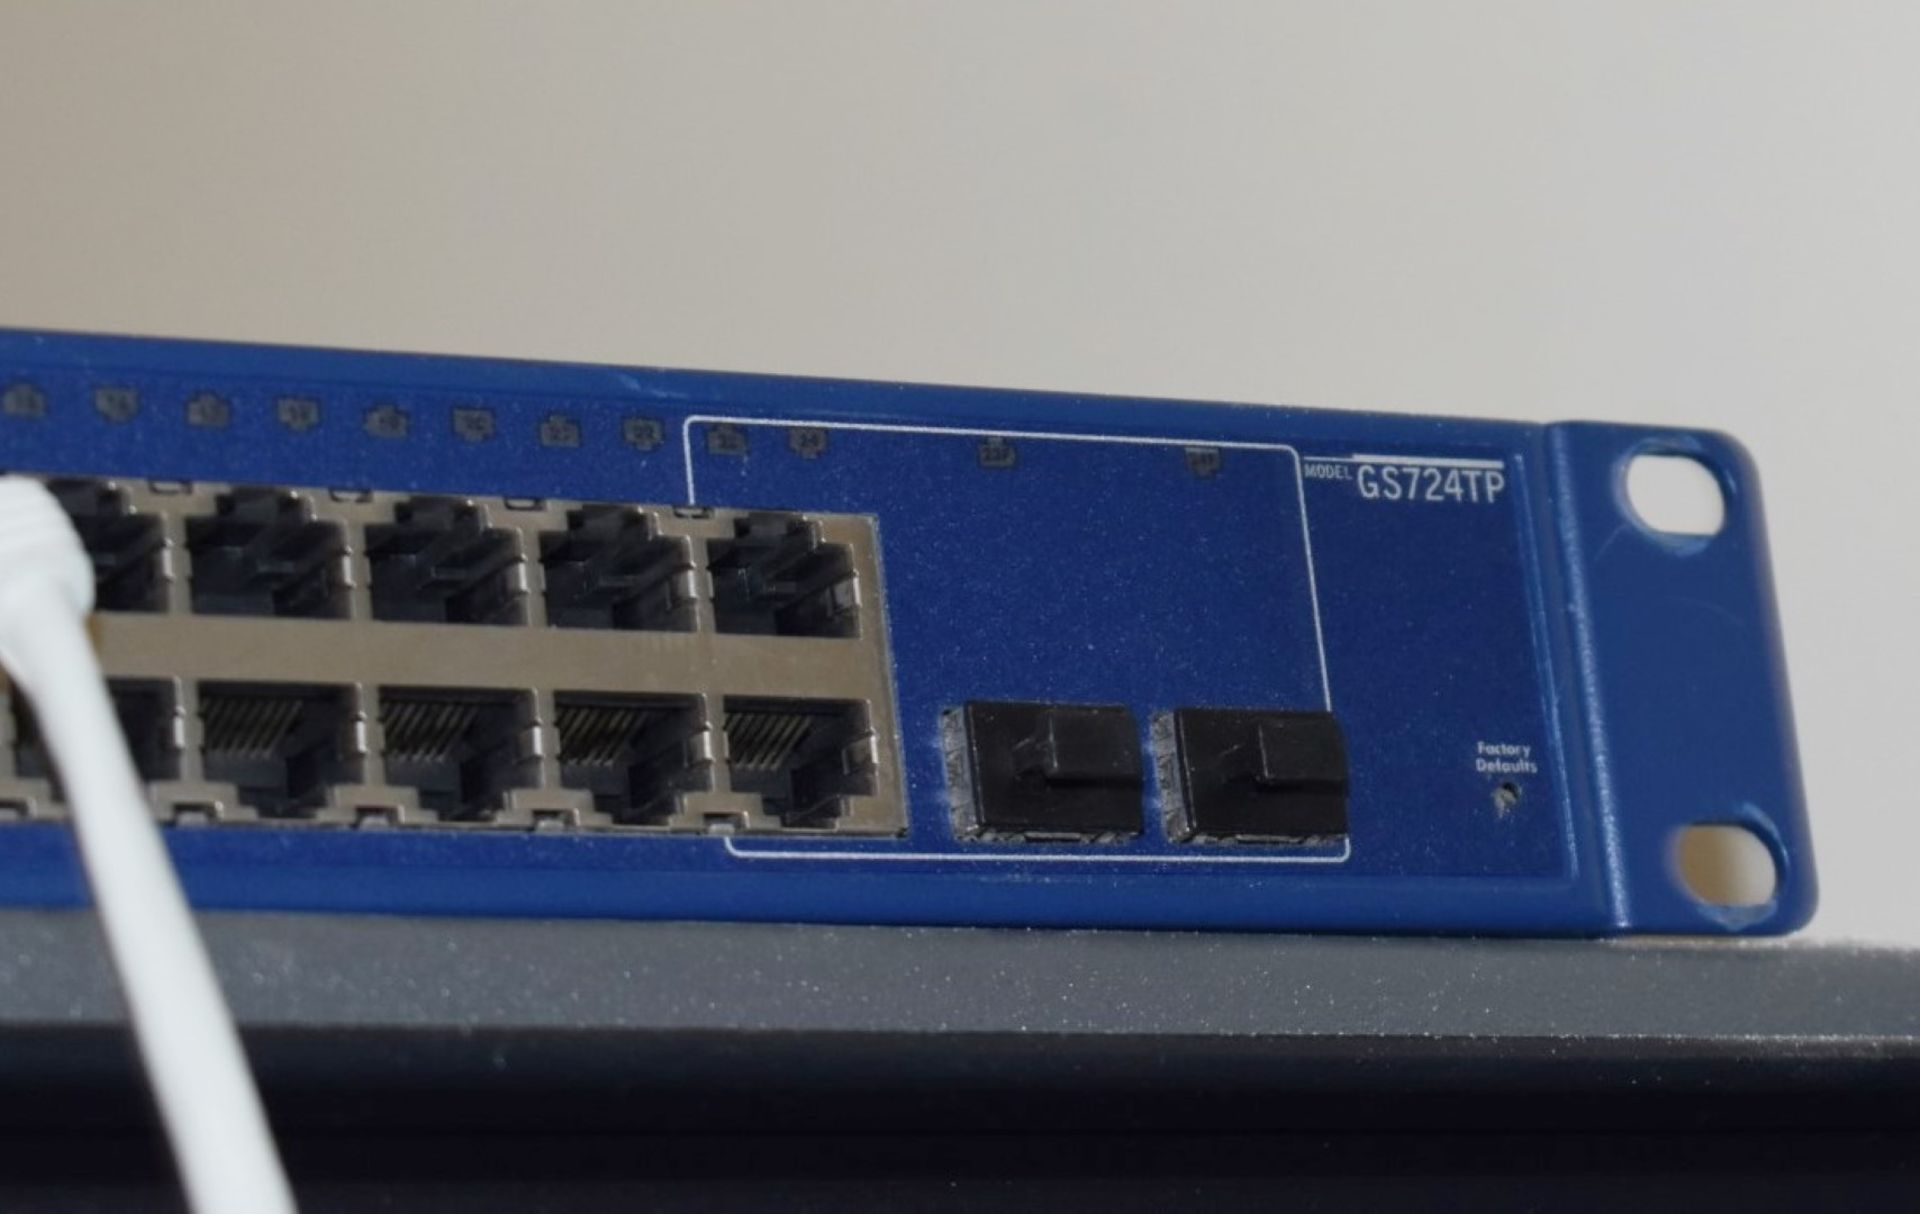 1 x Netgear ProSafe 24-port Gigabit Smart Network Switch - Model G5724TP - Image 2 of 2